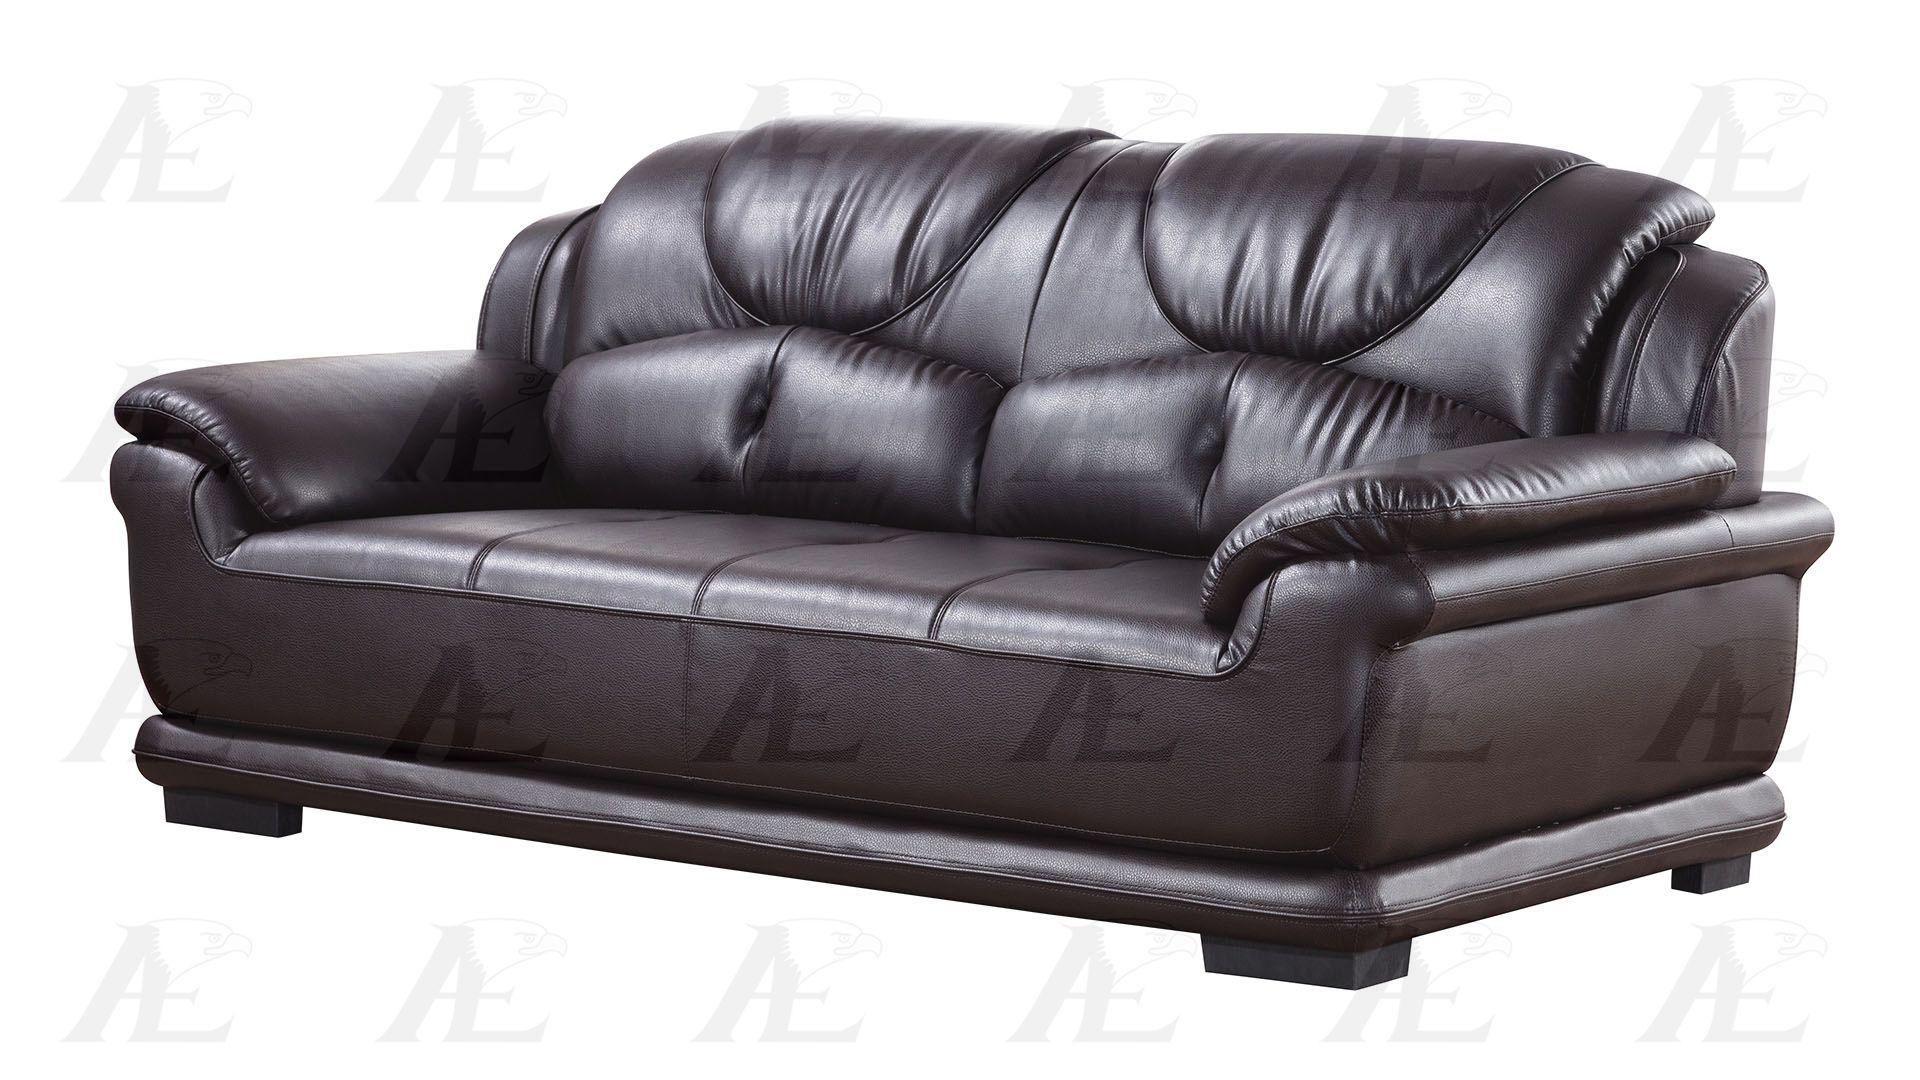 

    
American Eagle Furniture AE601-DC Sofa and Loveseat Set Chocolate AE601-DC Set-2
